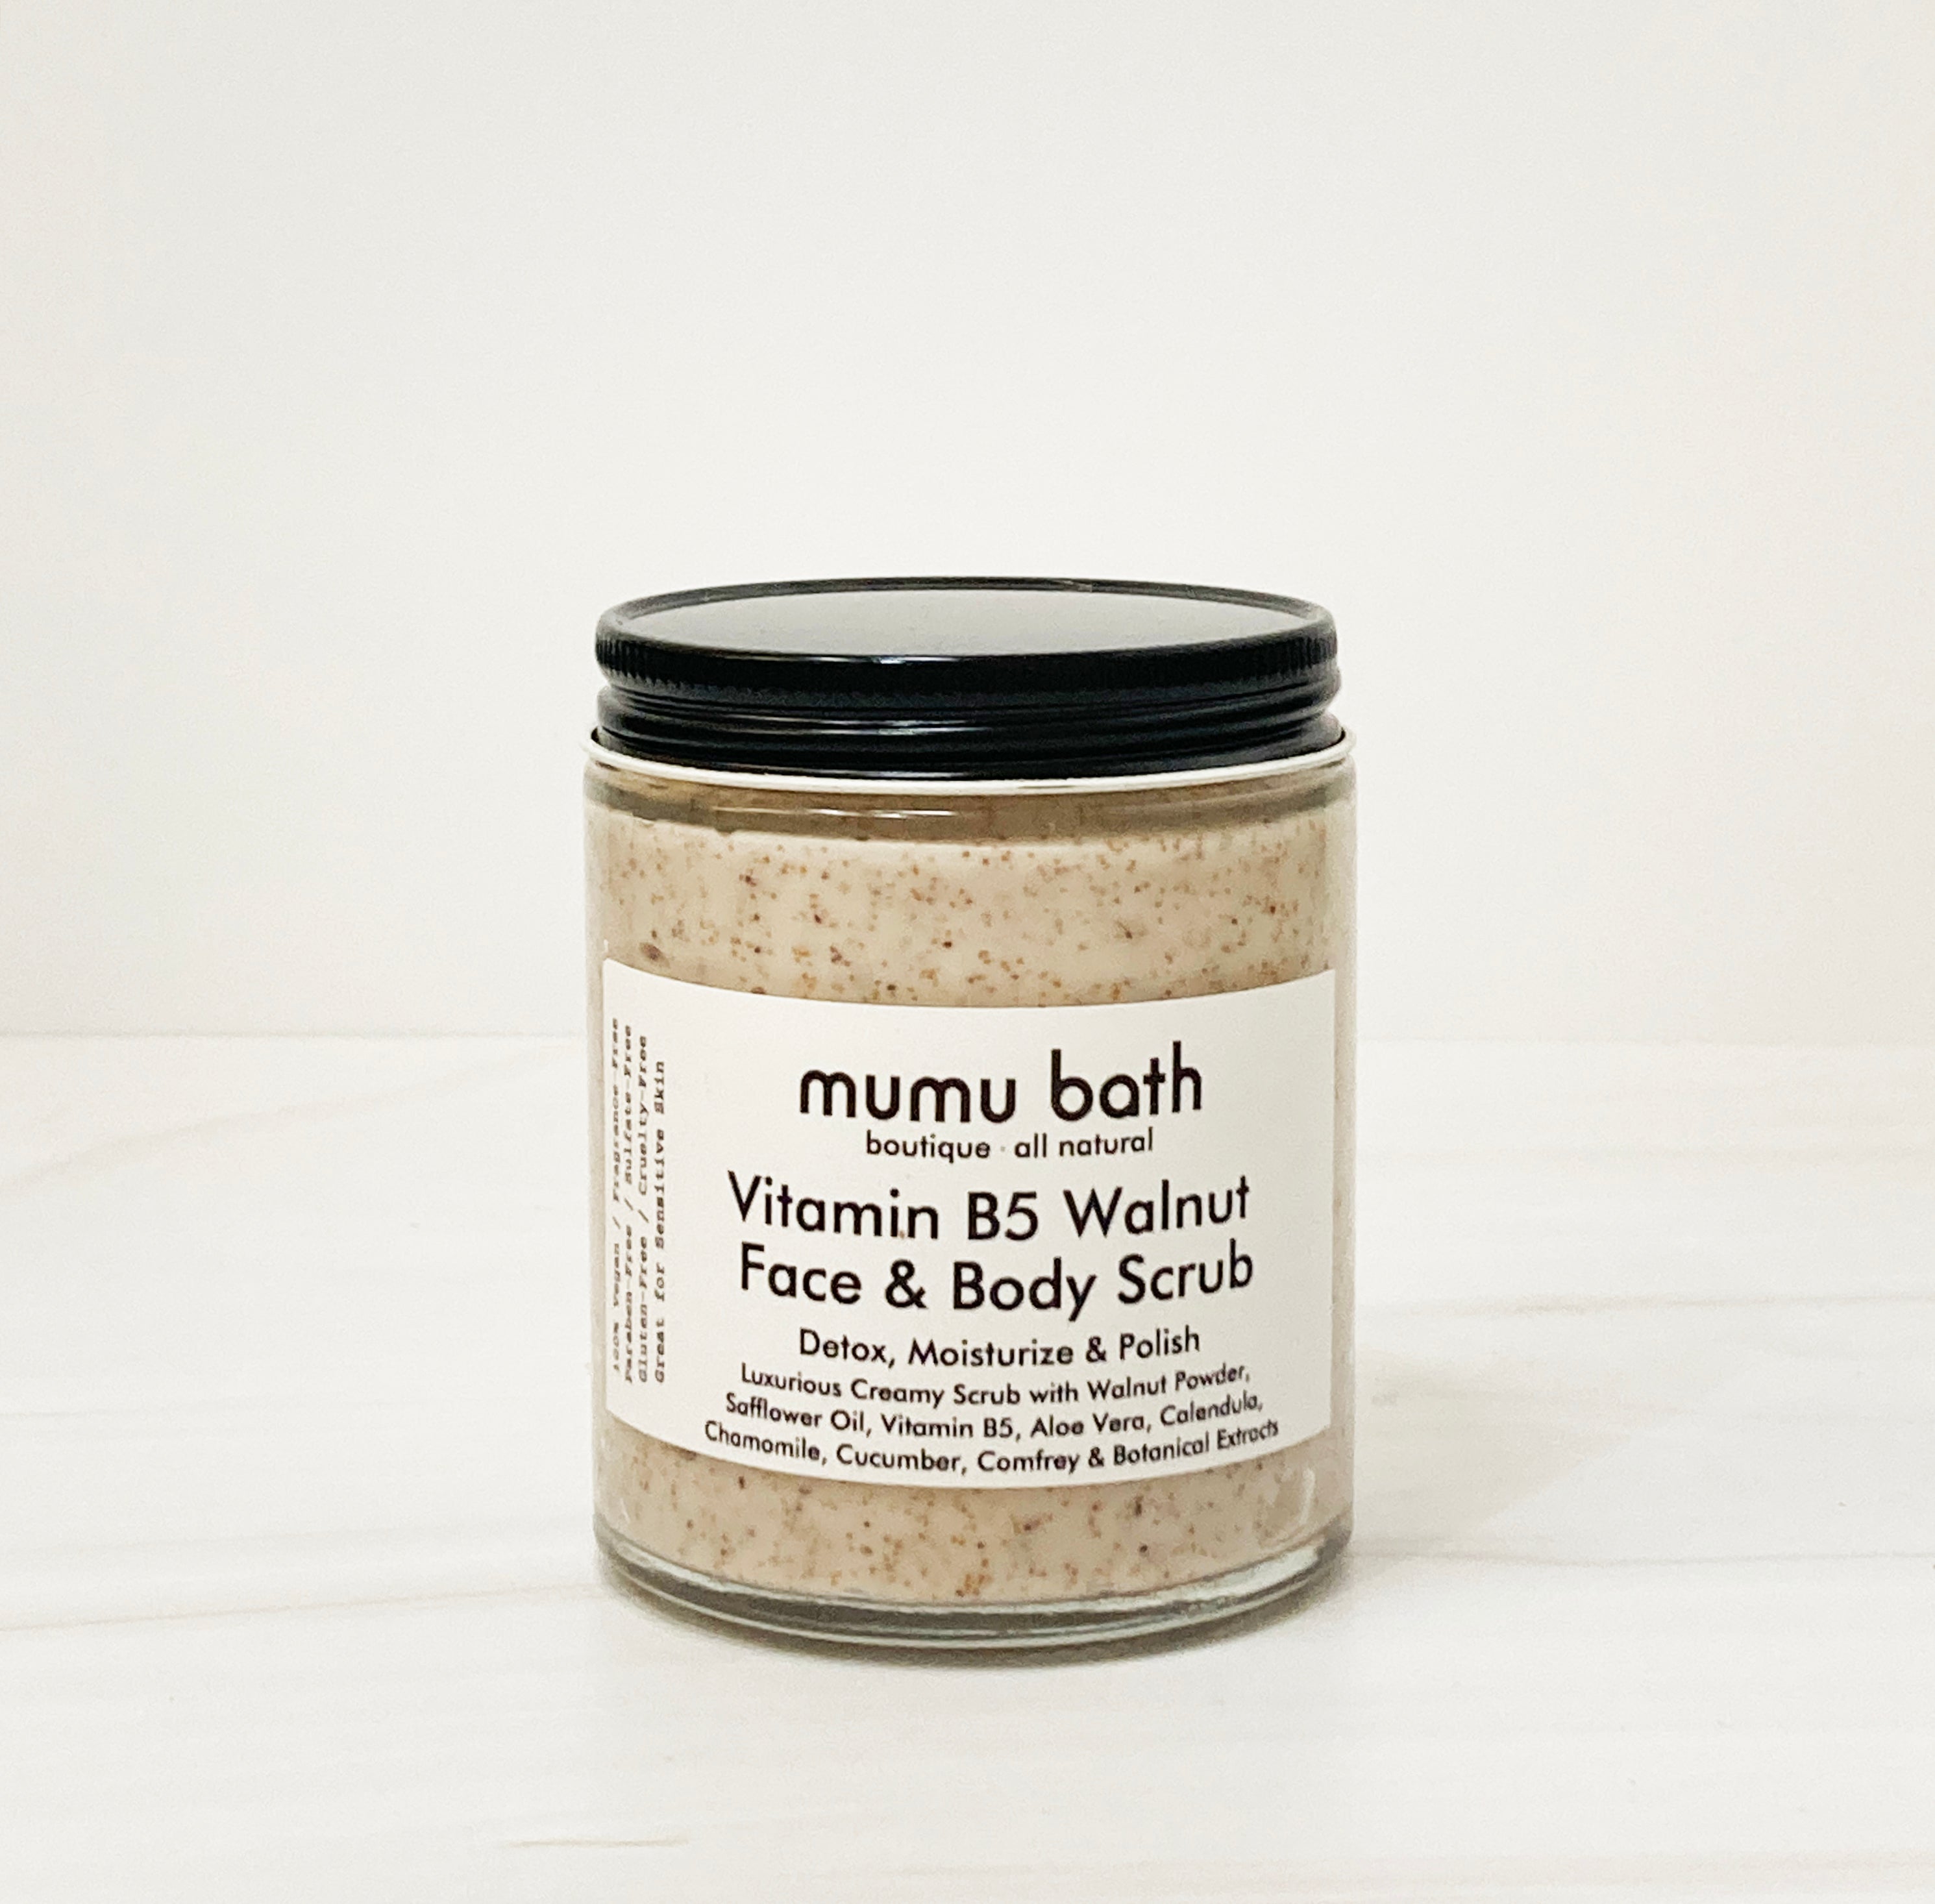 Vitamin B5 Walnut Face & Body Scrub - Mumu Bath